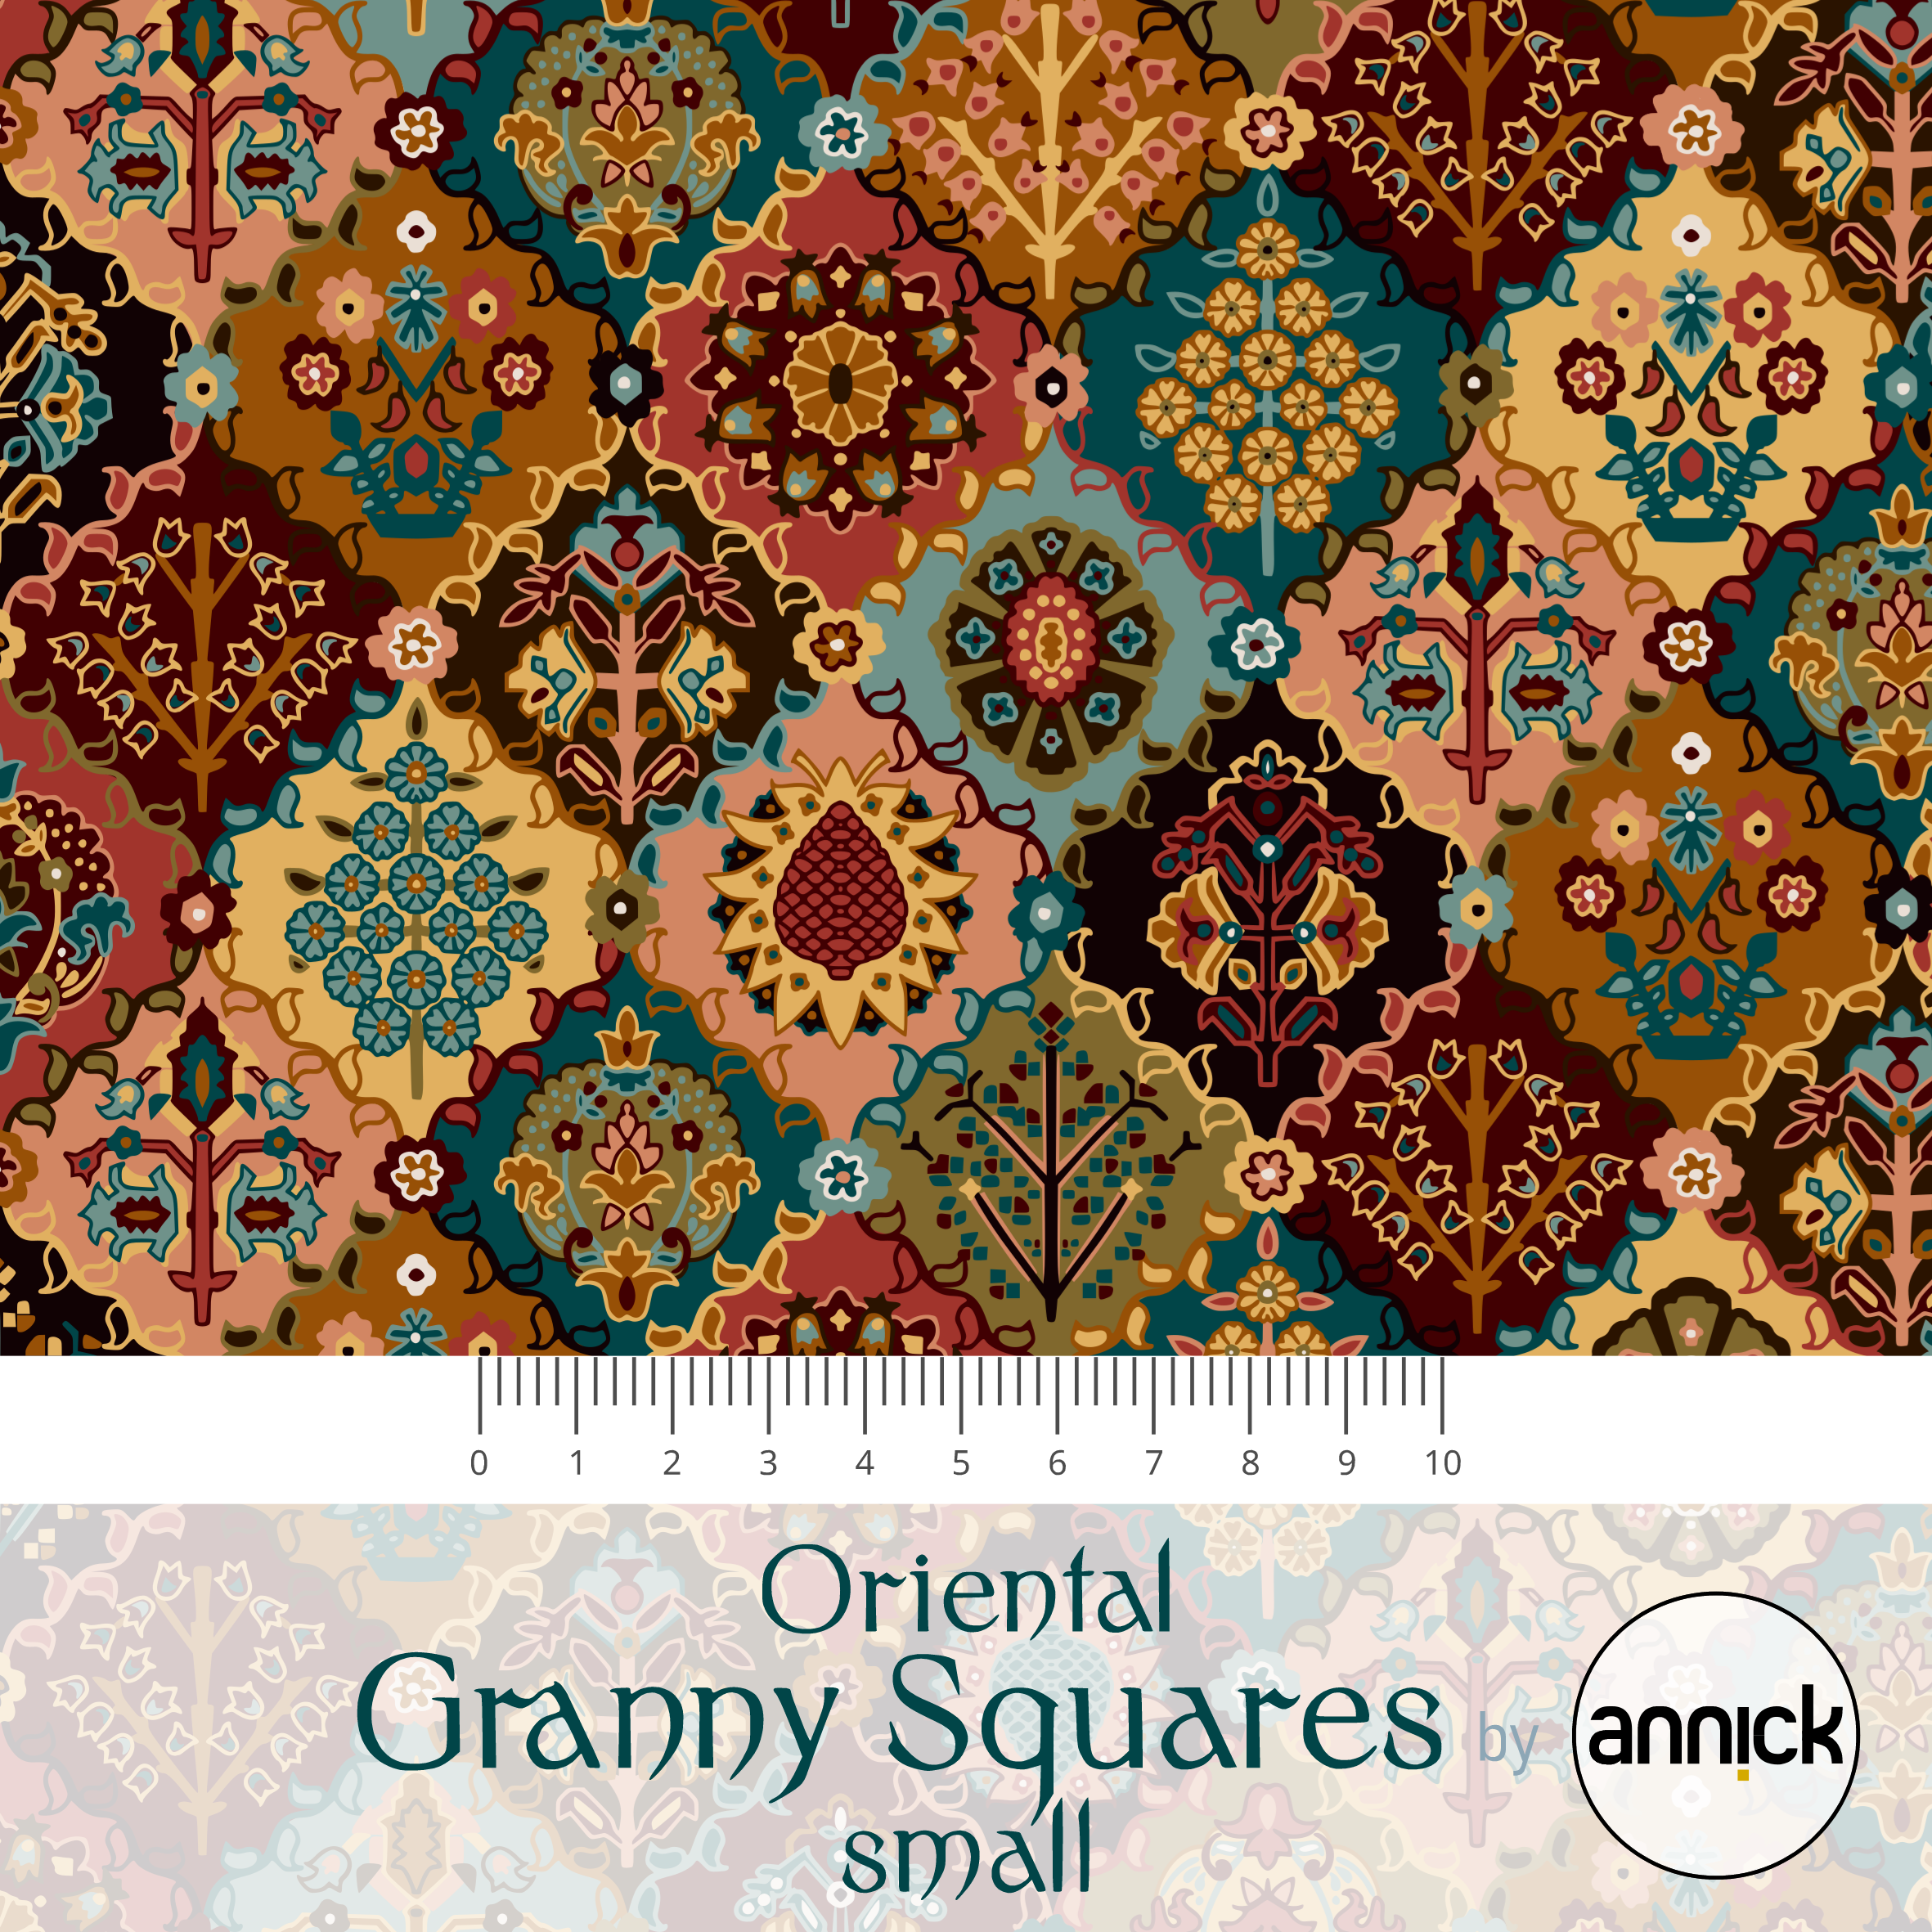 Oriental Granny Squares Small